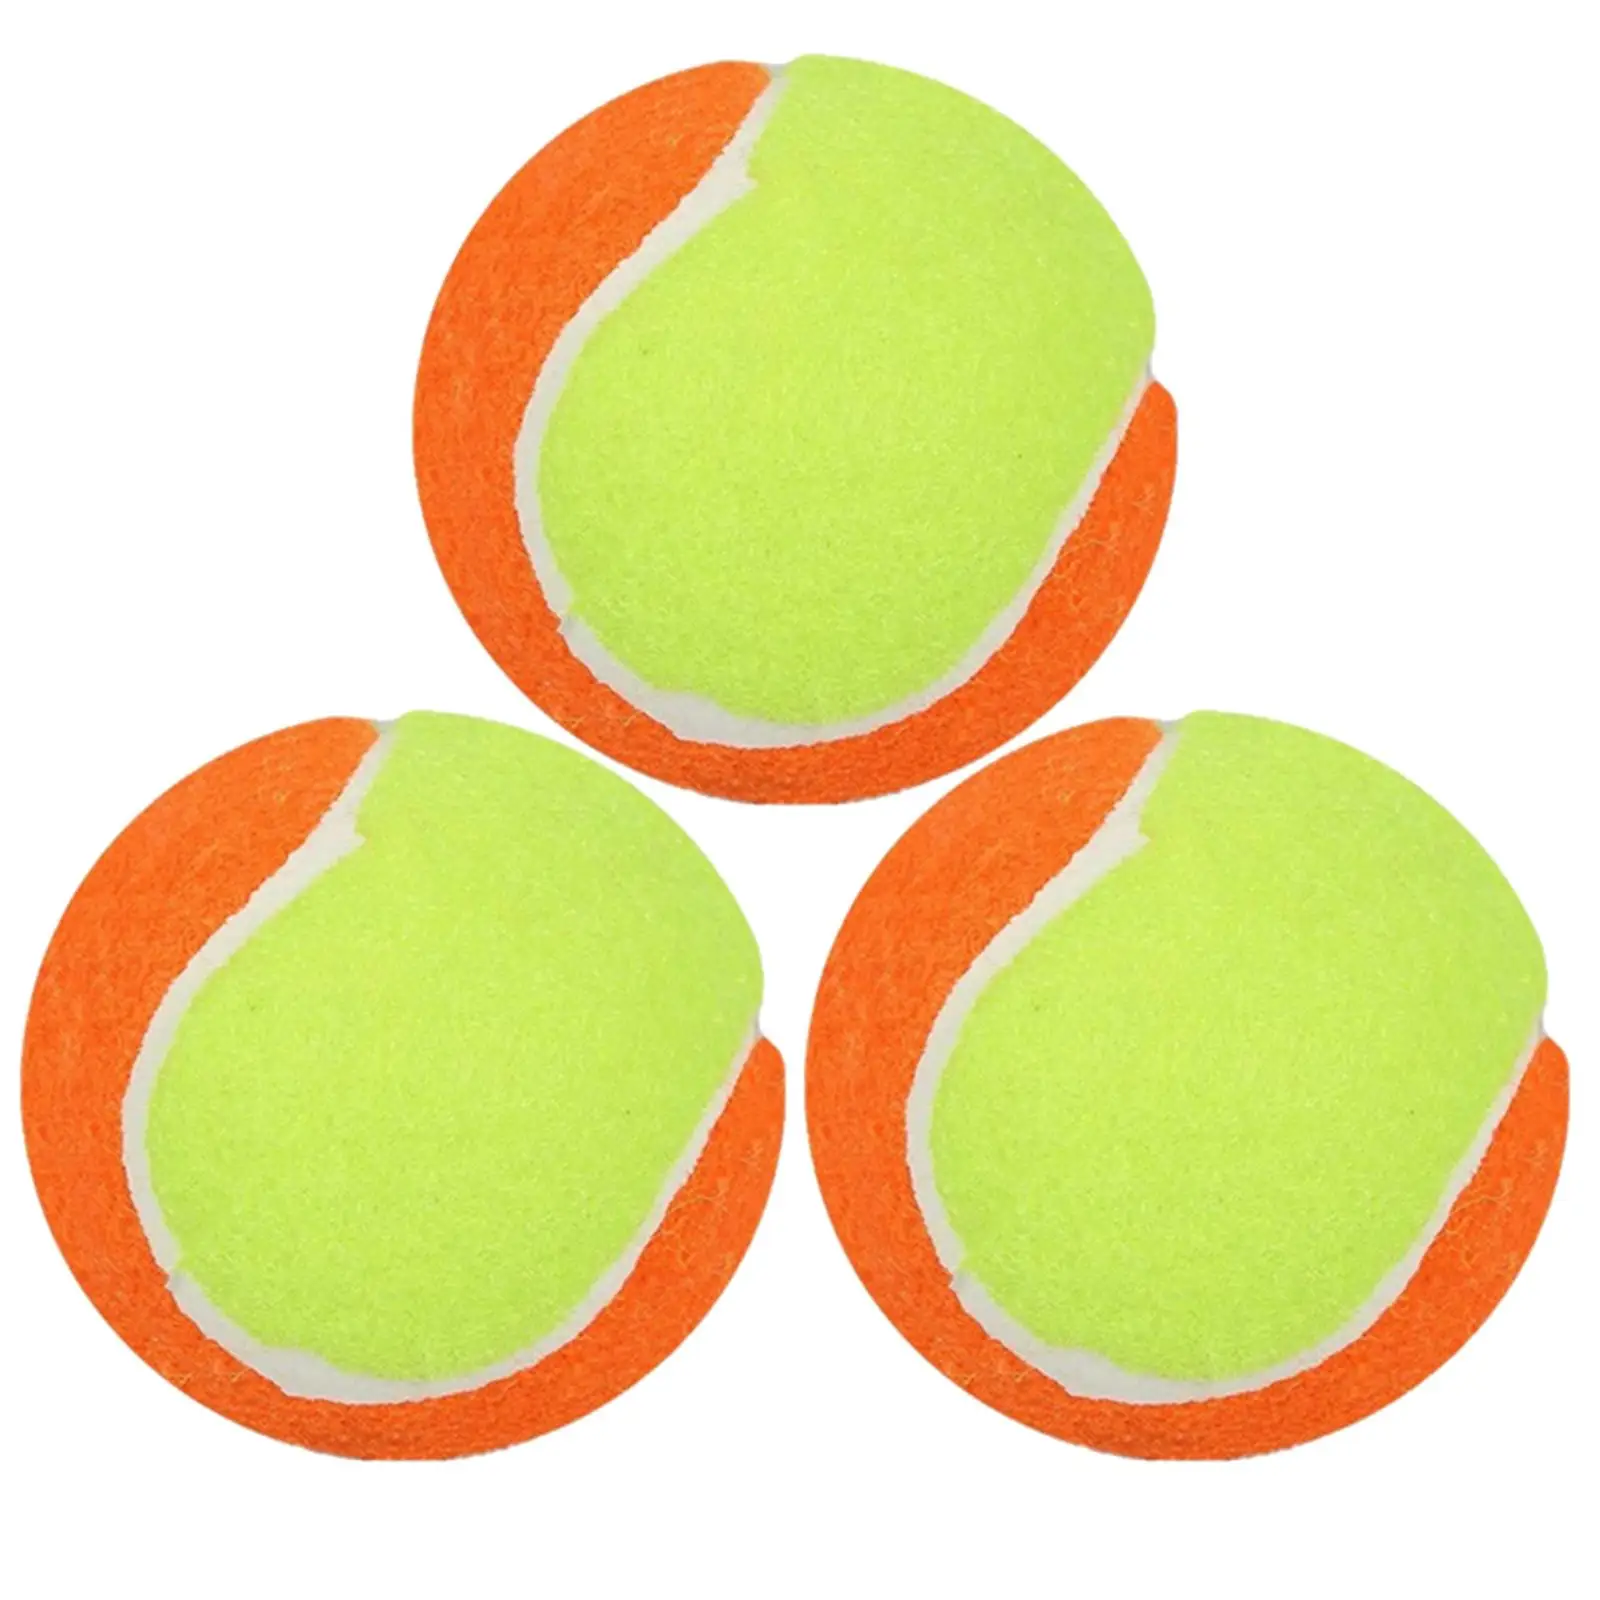 3x Soft Tennis Balls for Kids Easily Track pinwheel Hit Nice Shots for Beginners